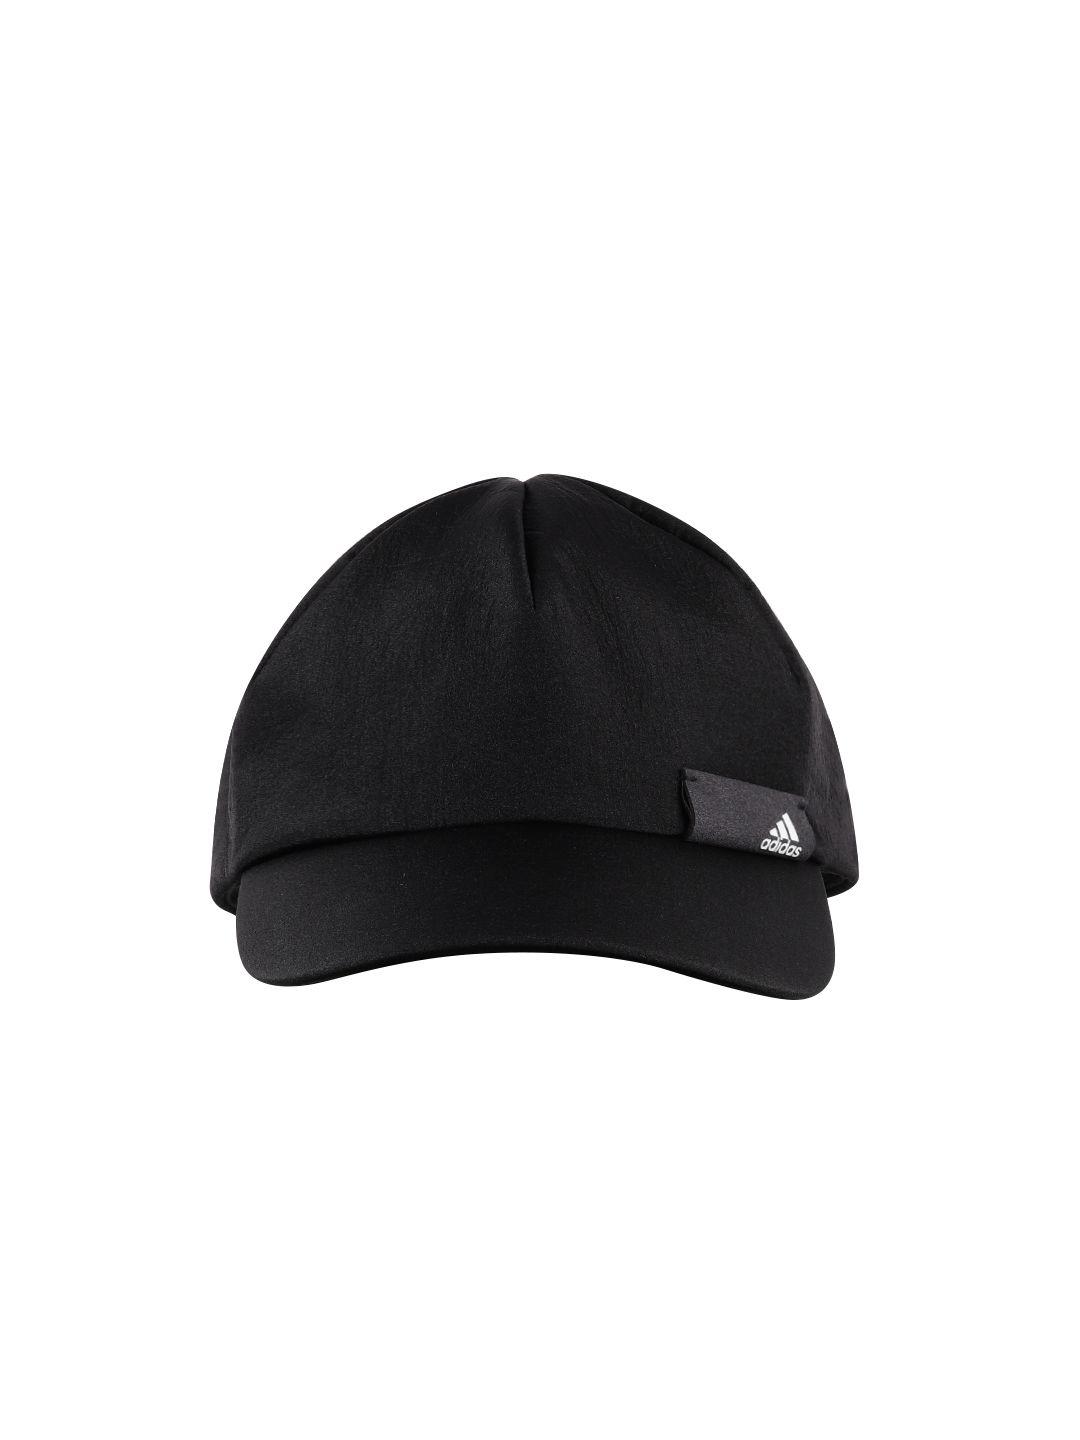 adidas-unisex-brand-logo-detail-4nwnl-baseball-cap